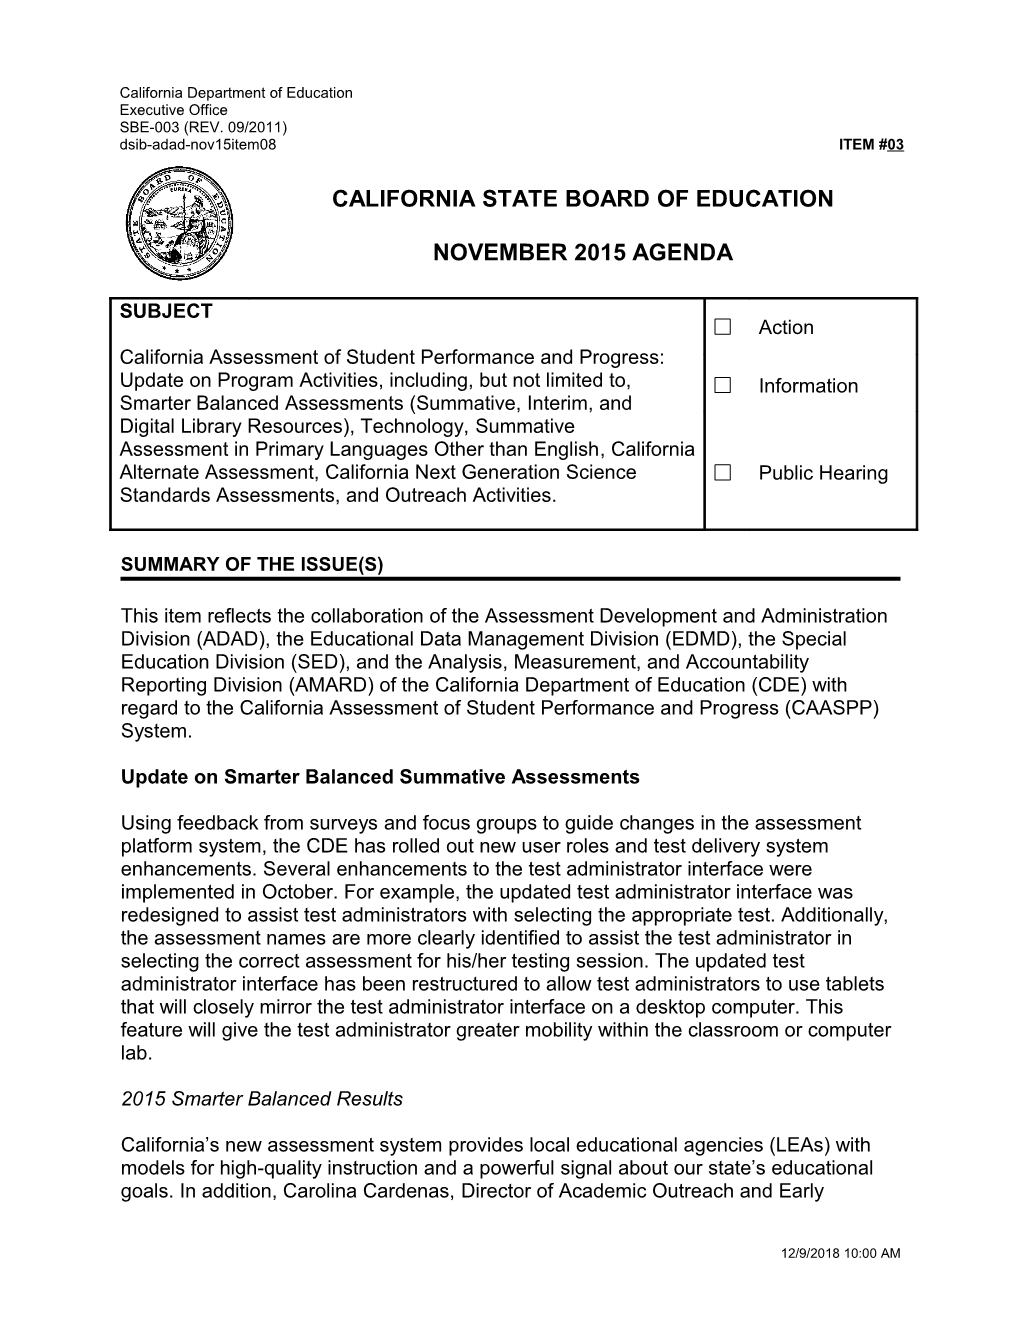 November 2015 Agenda Item 03 - Meeting Agendas (CA State Board of Education)